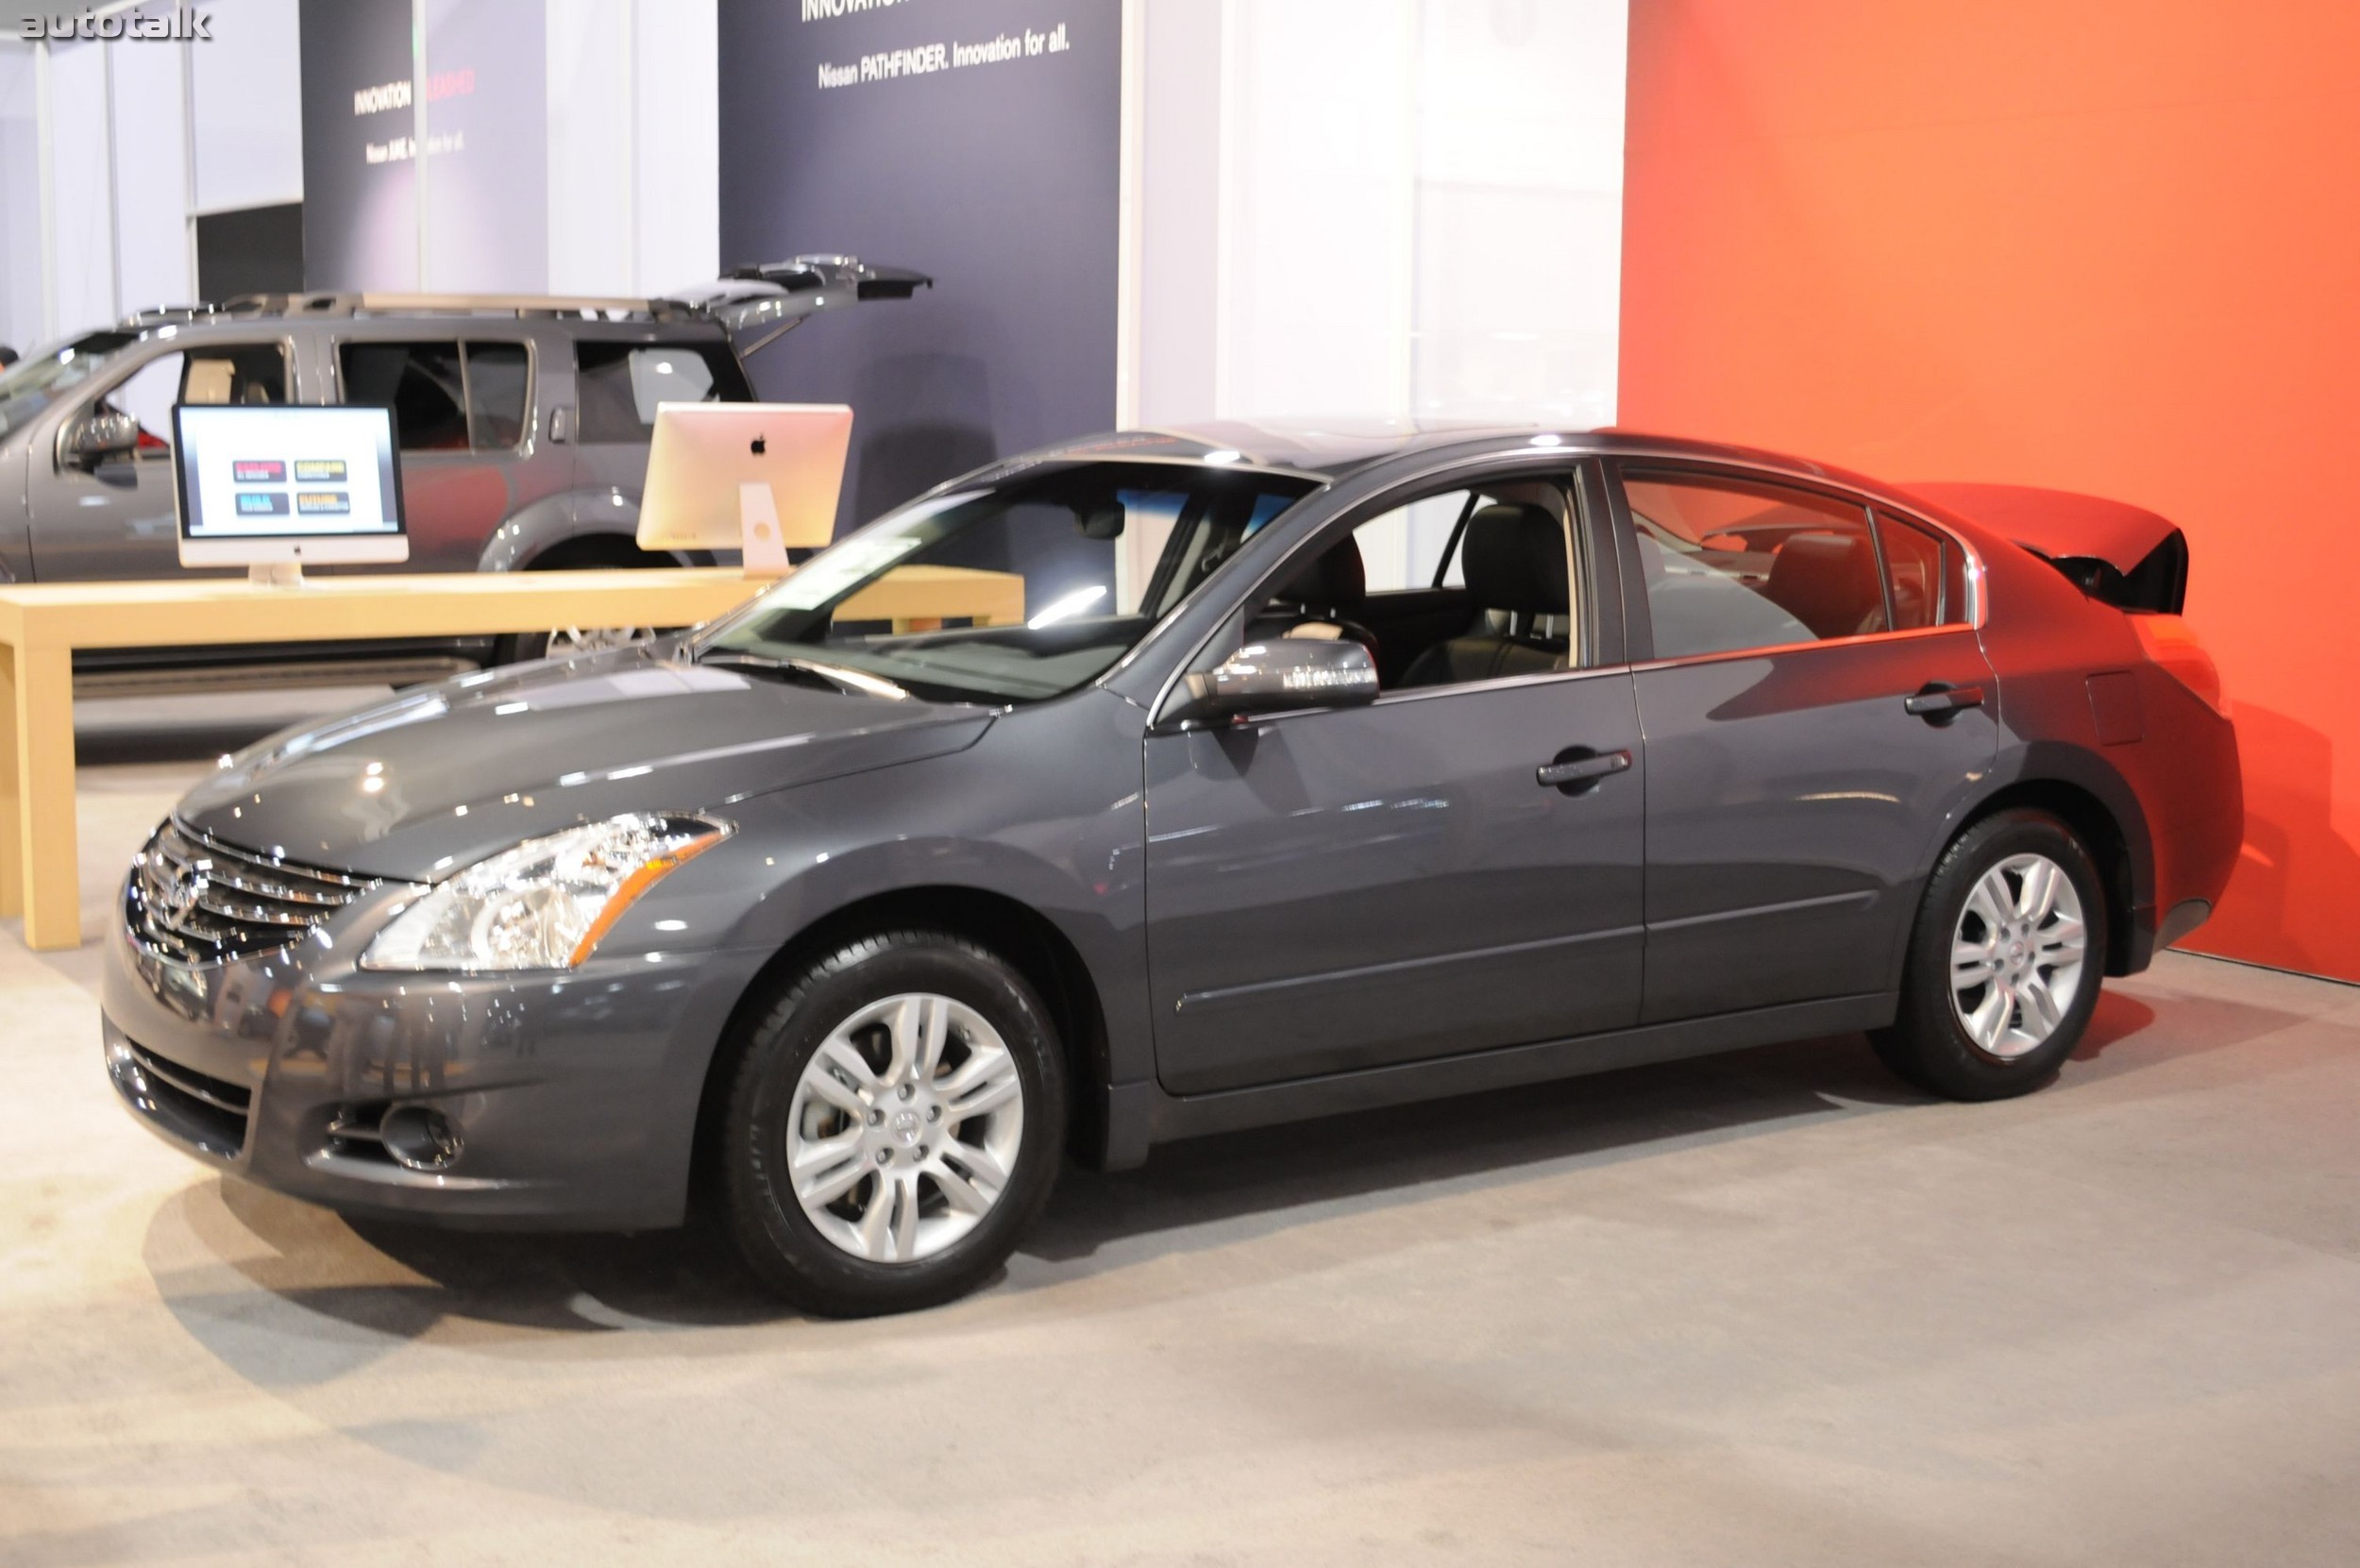 Nissan at 2011 Atlanta Auto Show